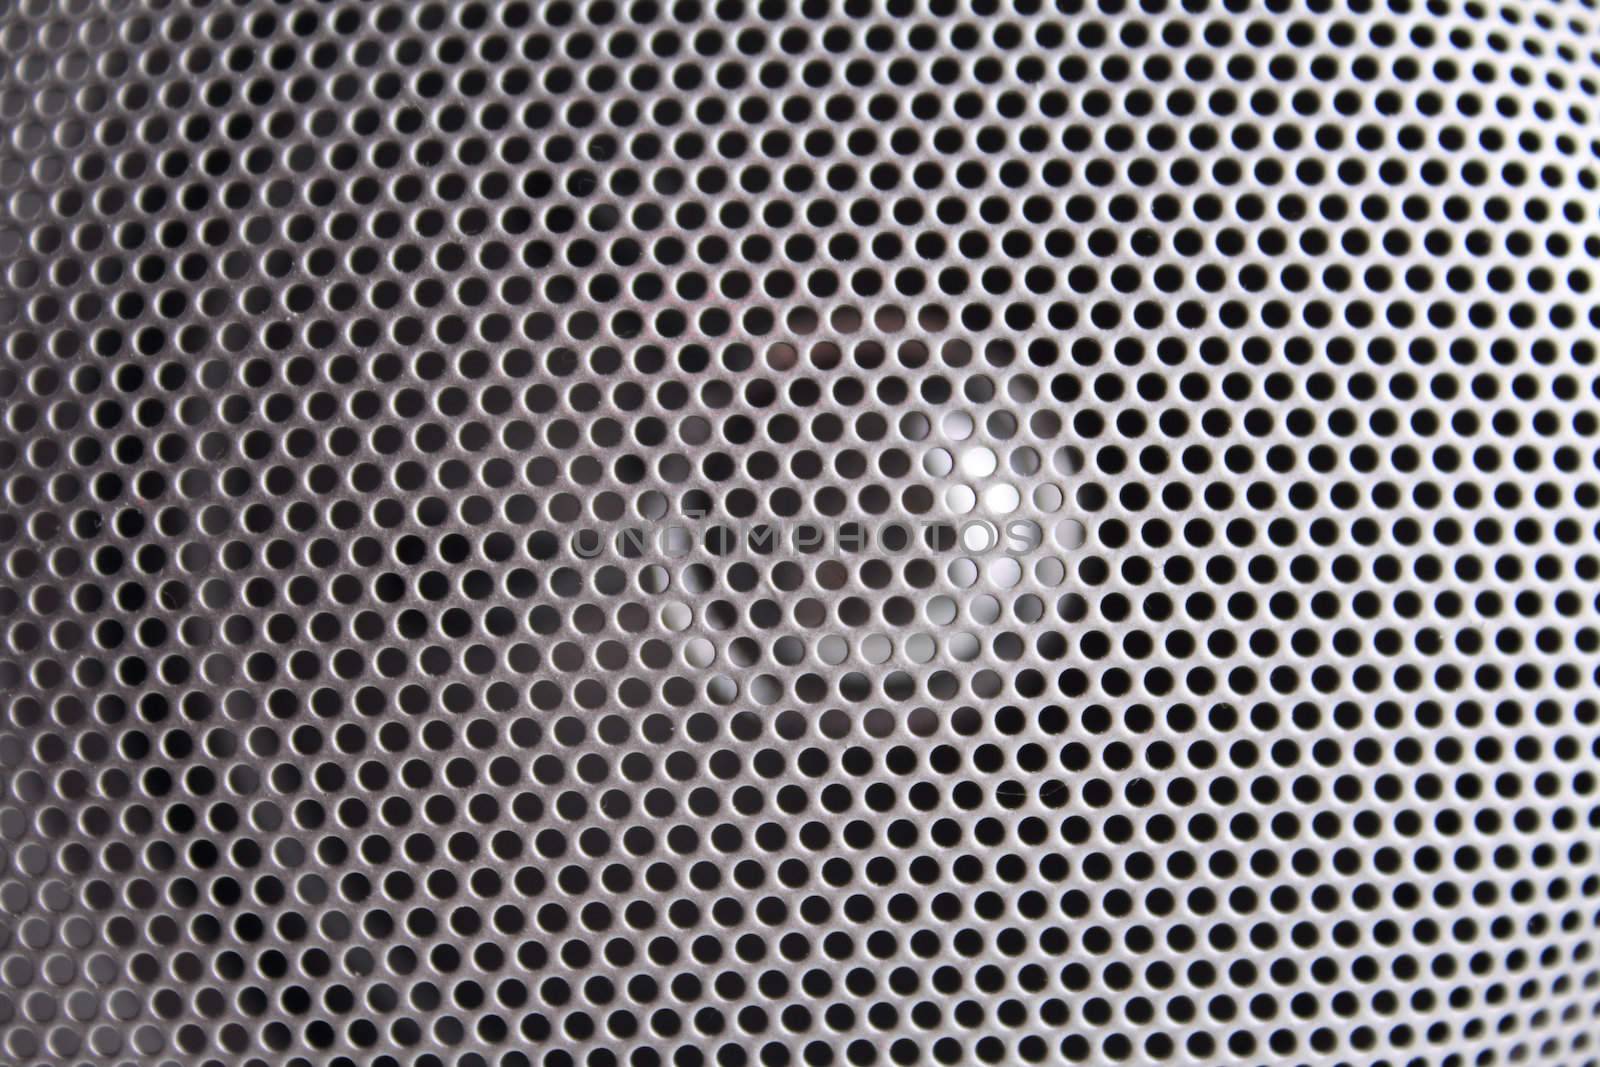 Lattice of a radio receiver removed close up